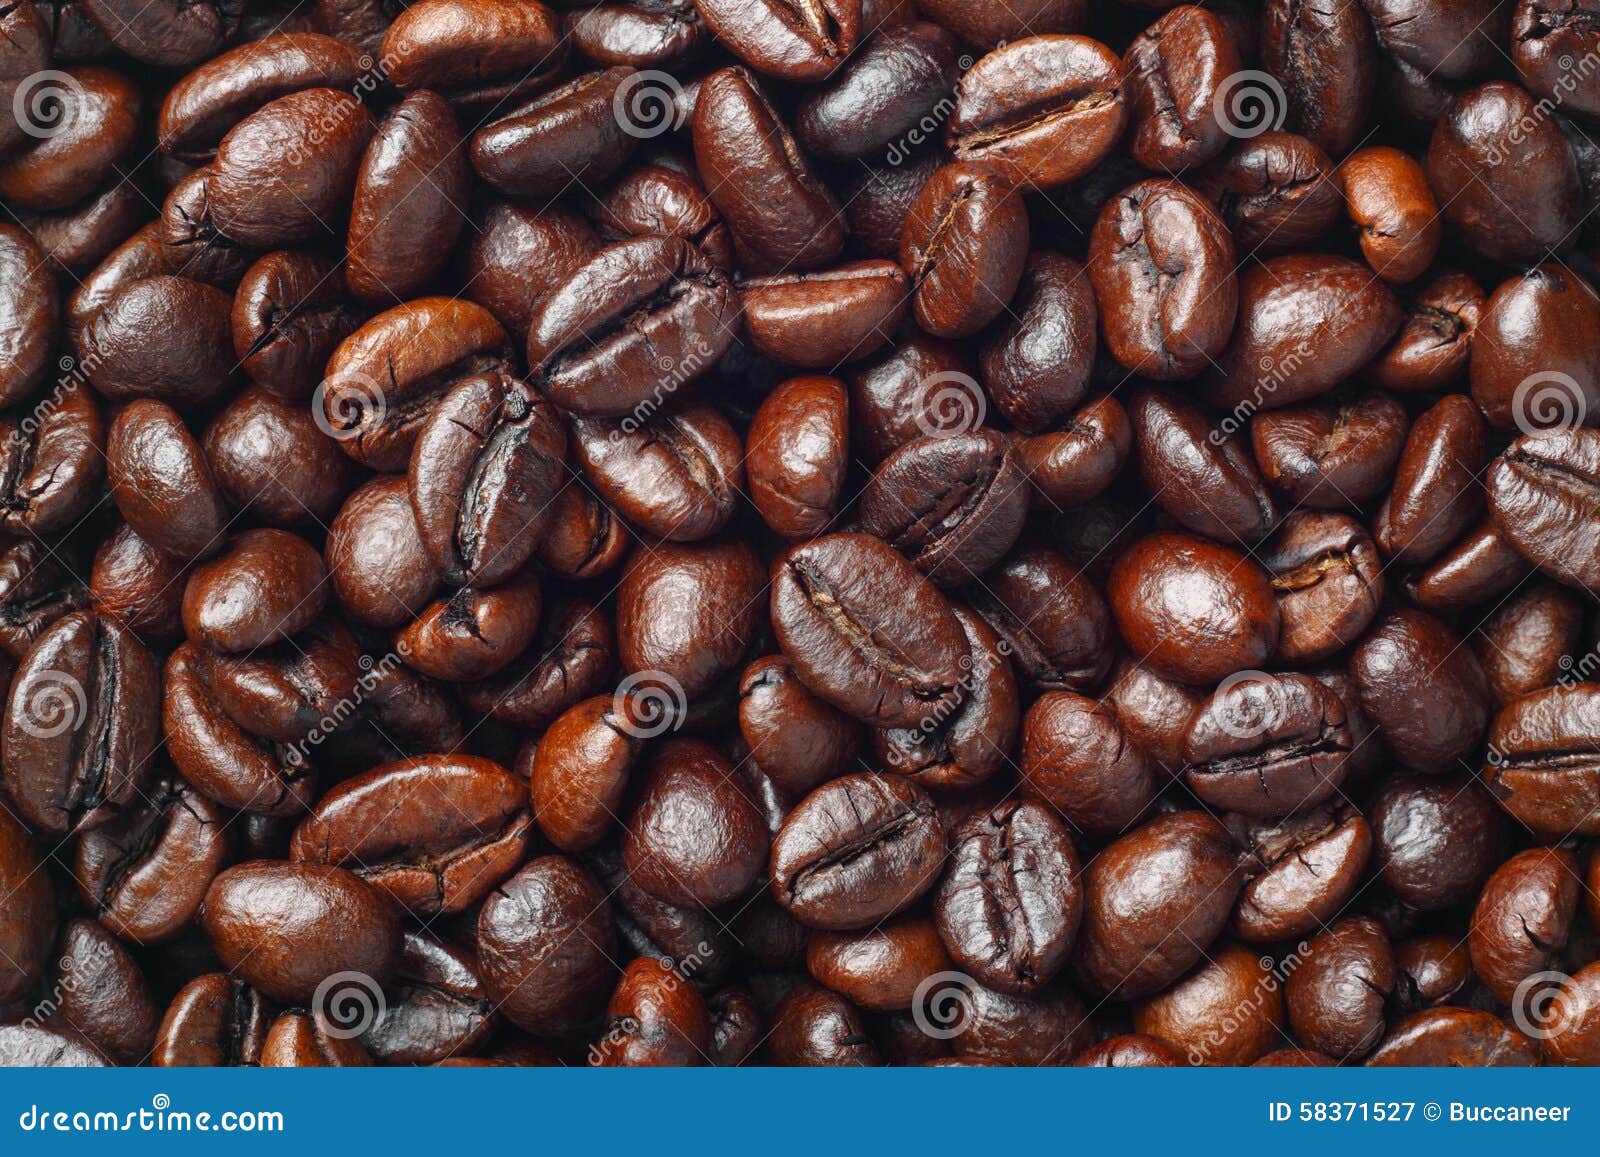 coffee beans (robusta coffee)